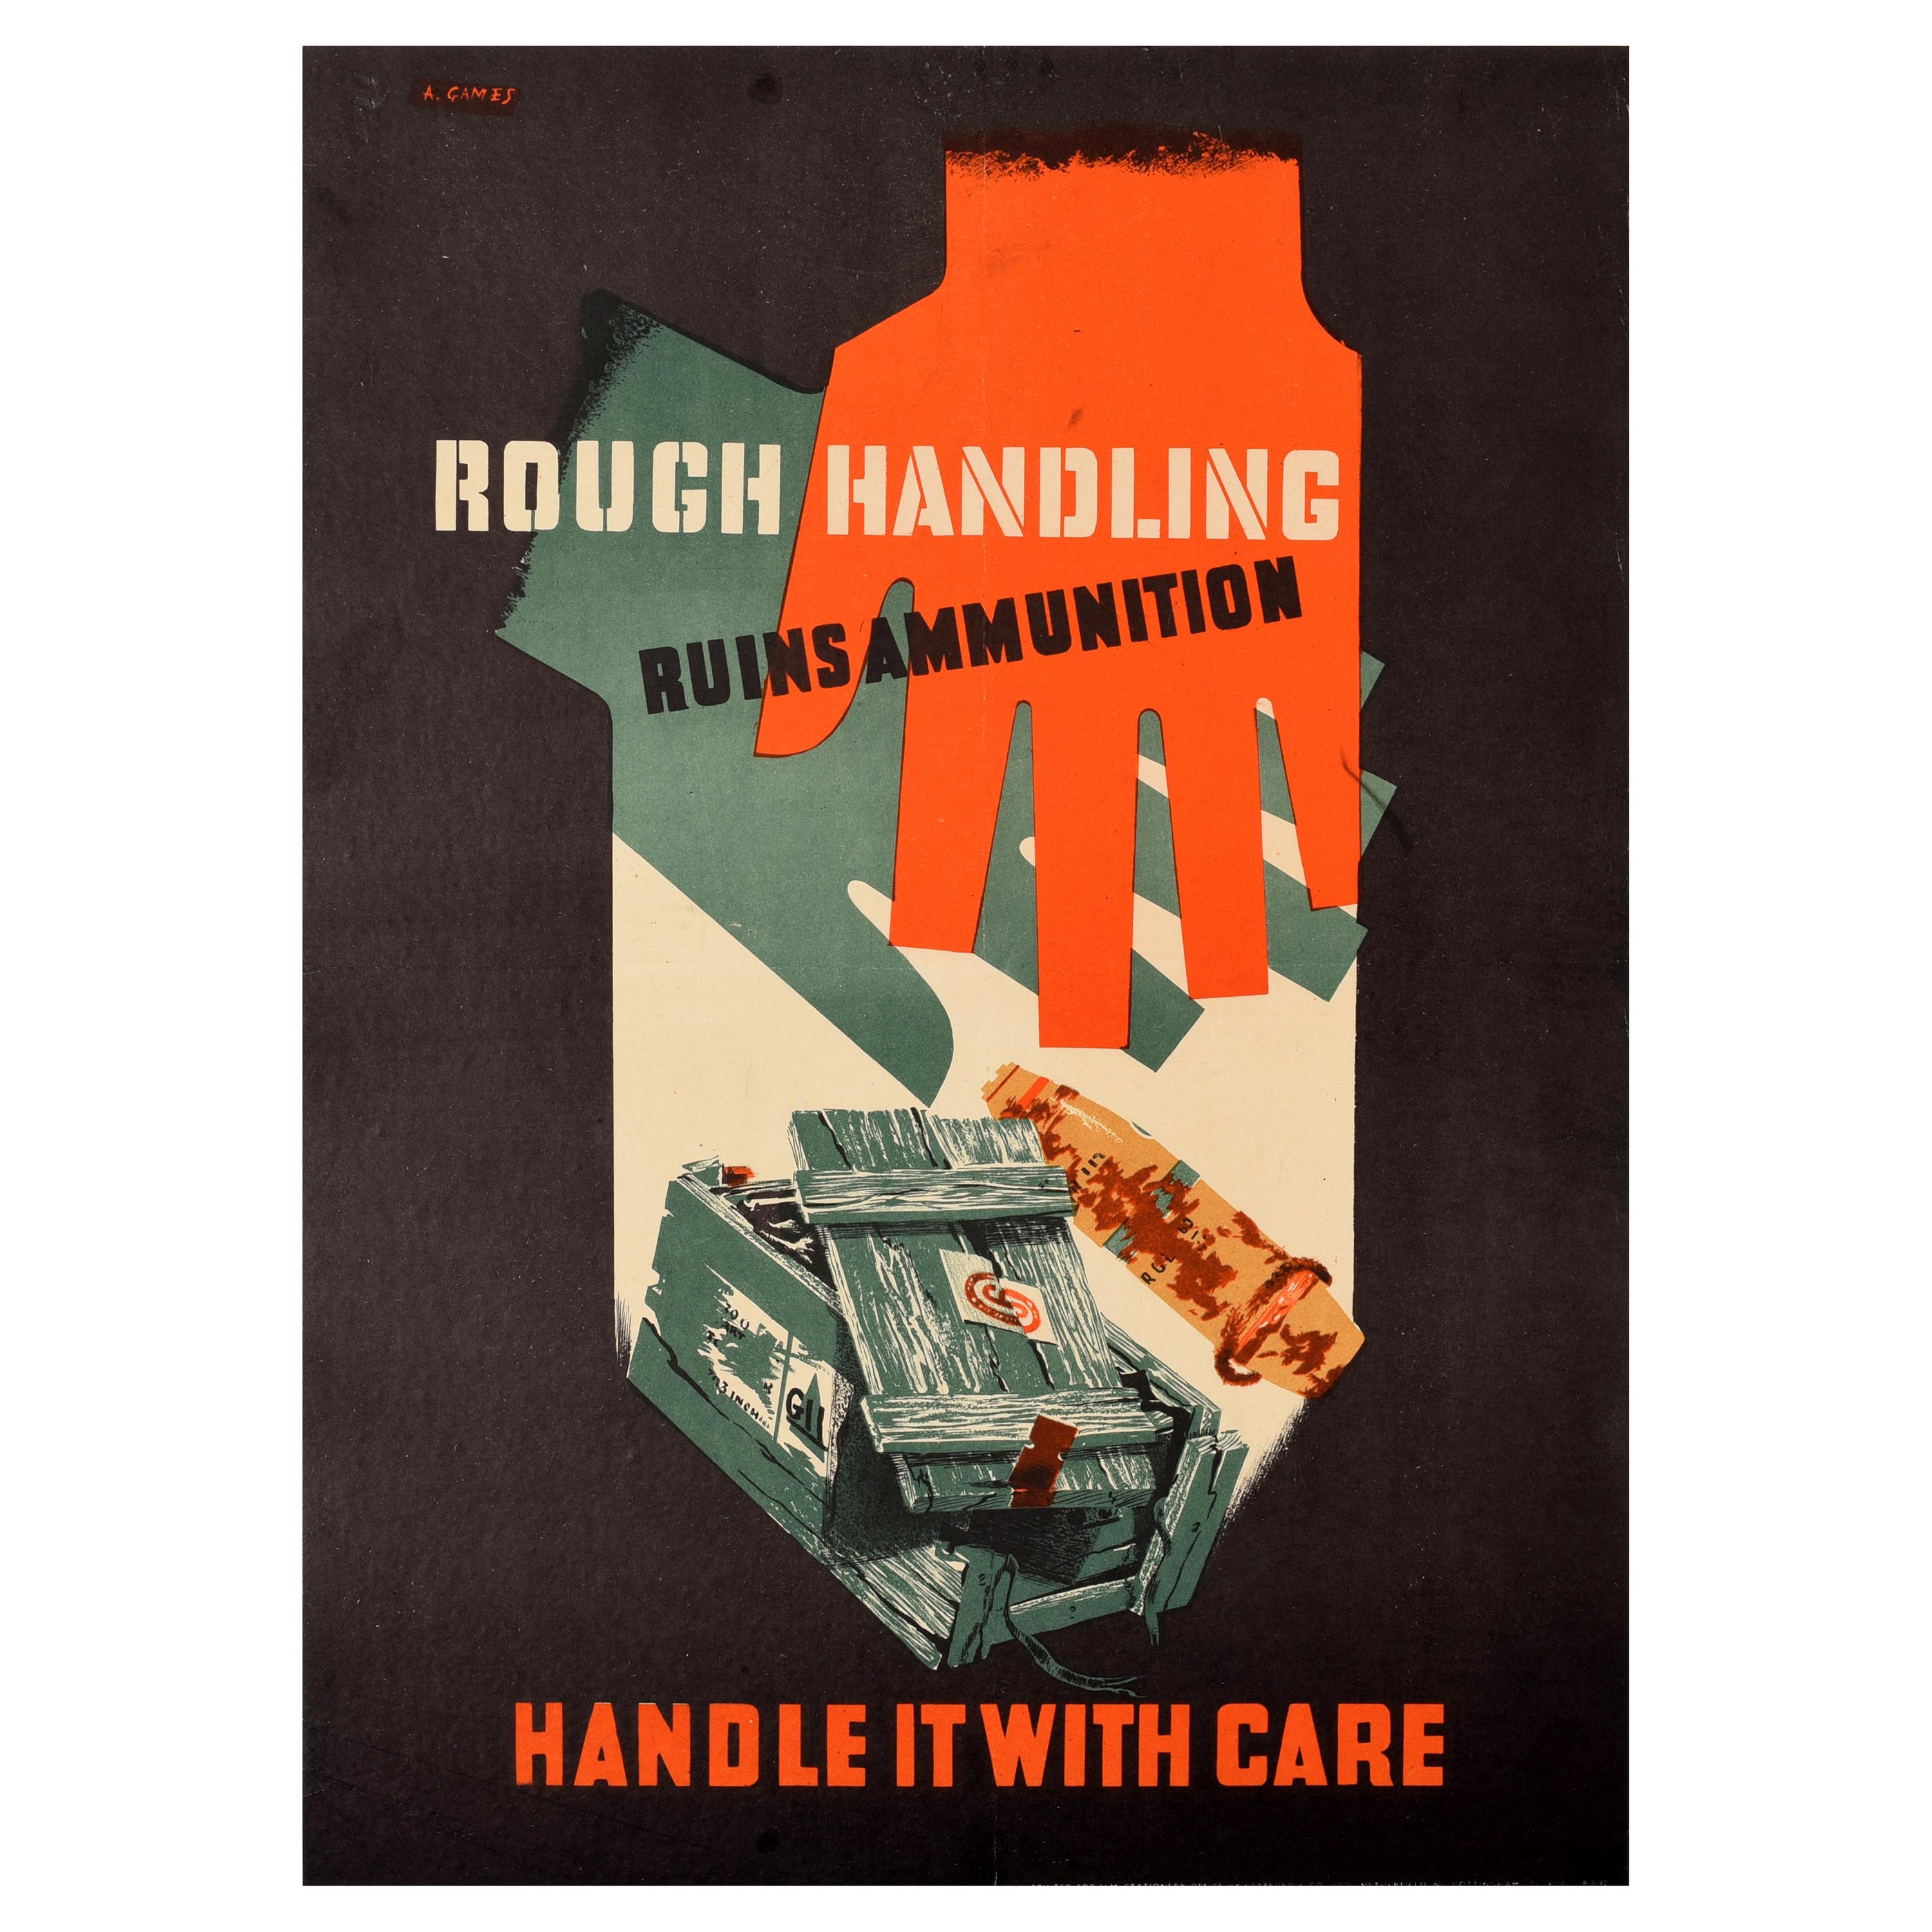 Original Vintage WWII Poster Rough Handling Ruins Ammunition Safety Care Warning